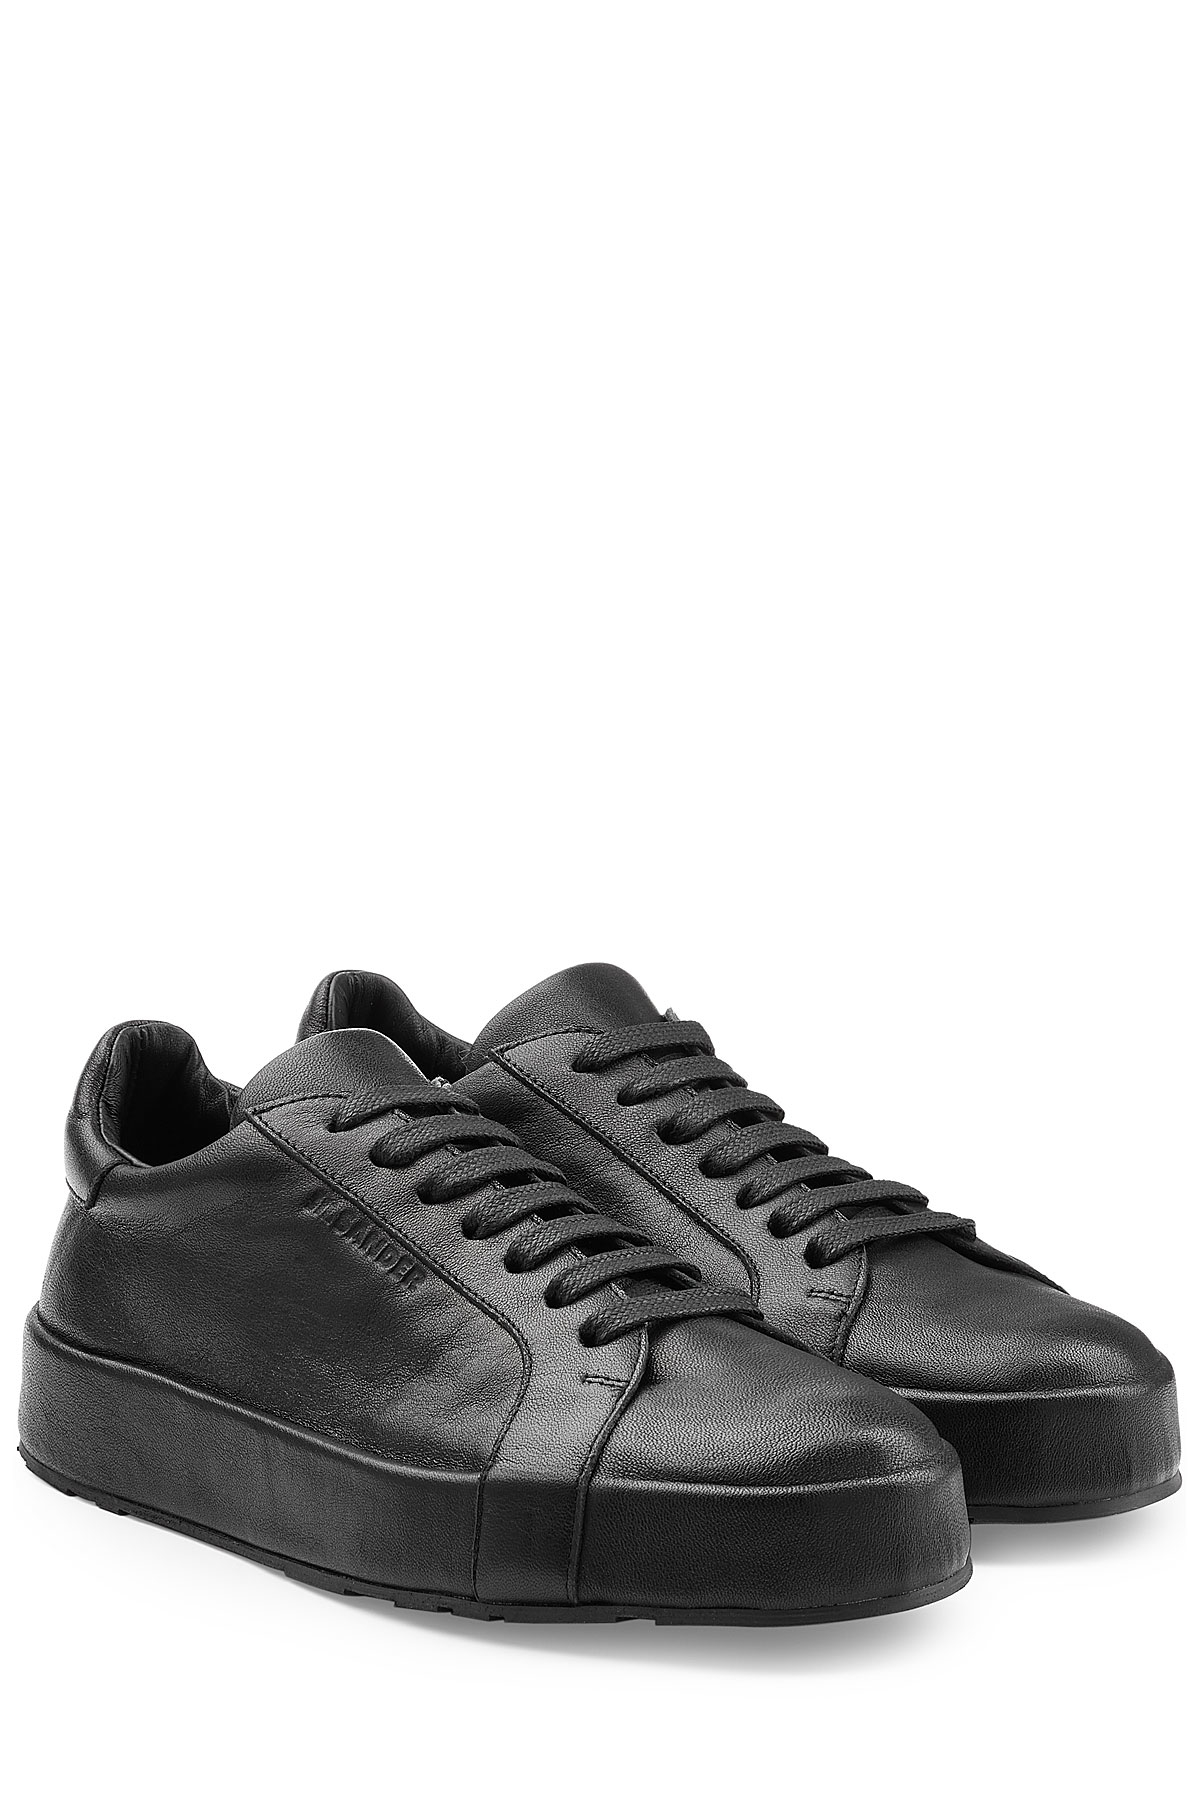 Lyst - Jil Sander Leather Sneakers in Black